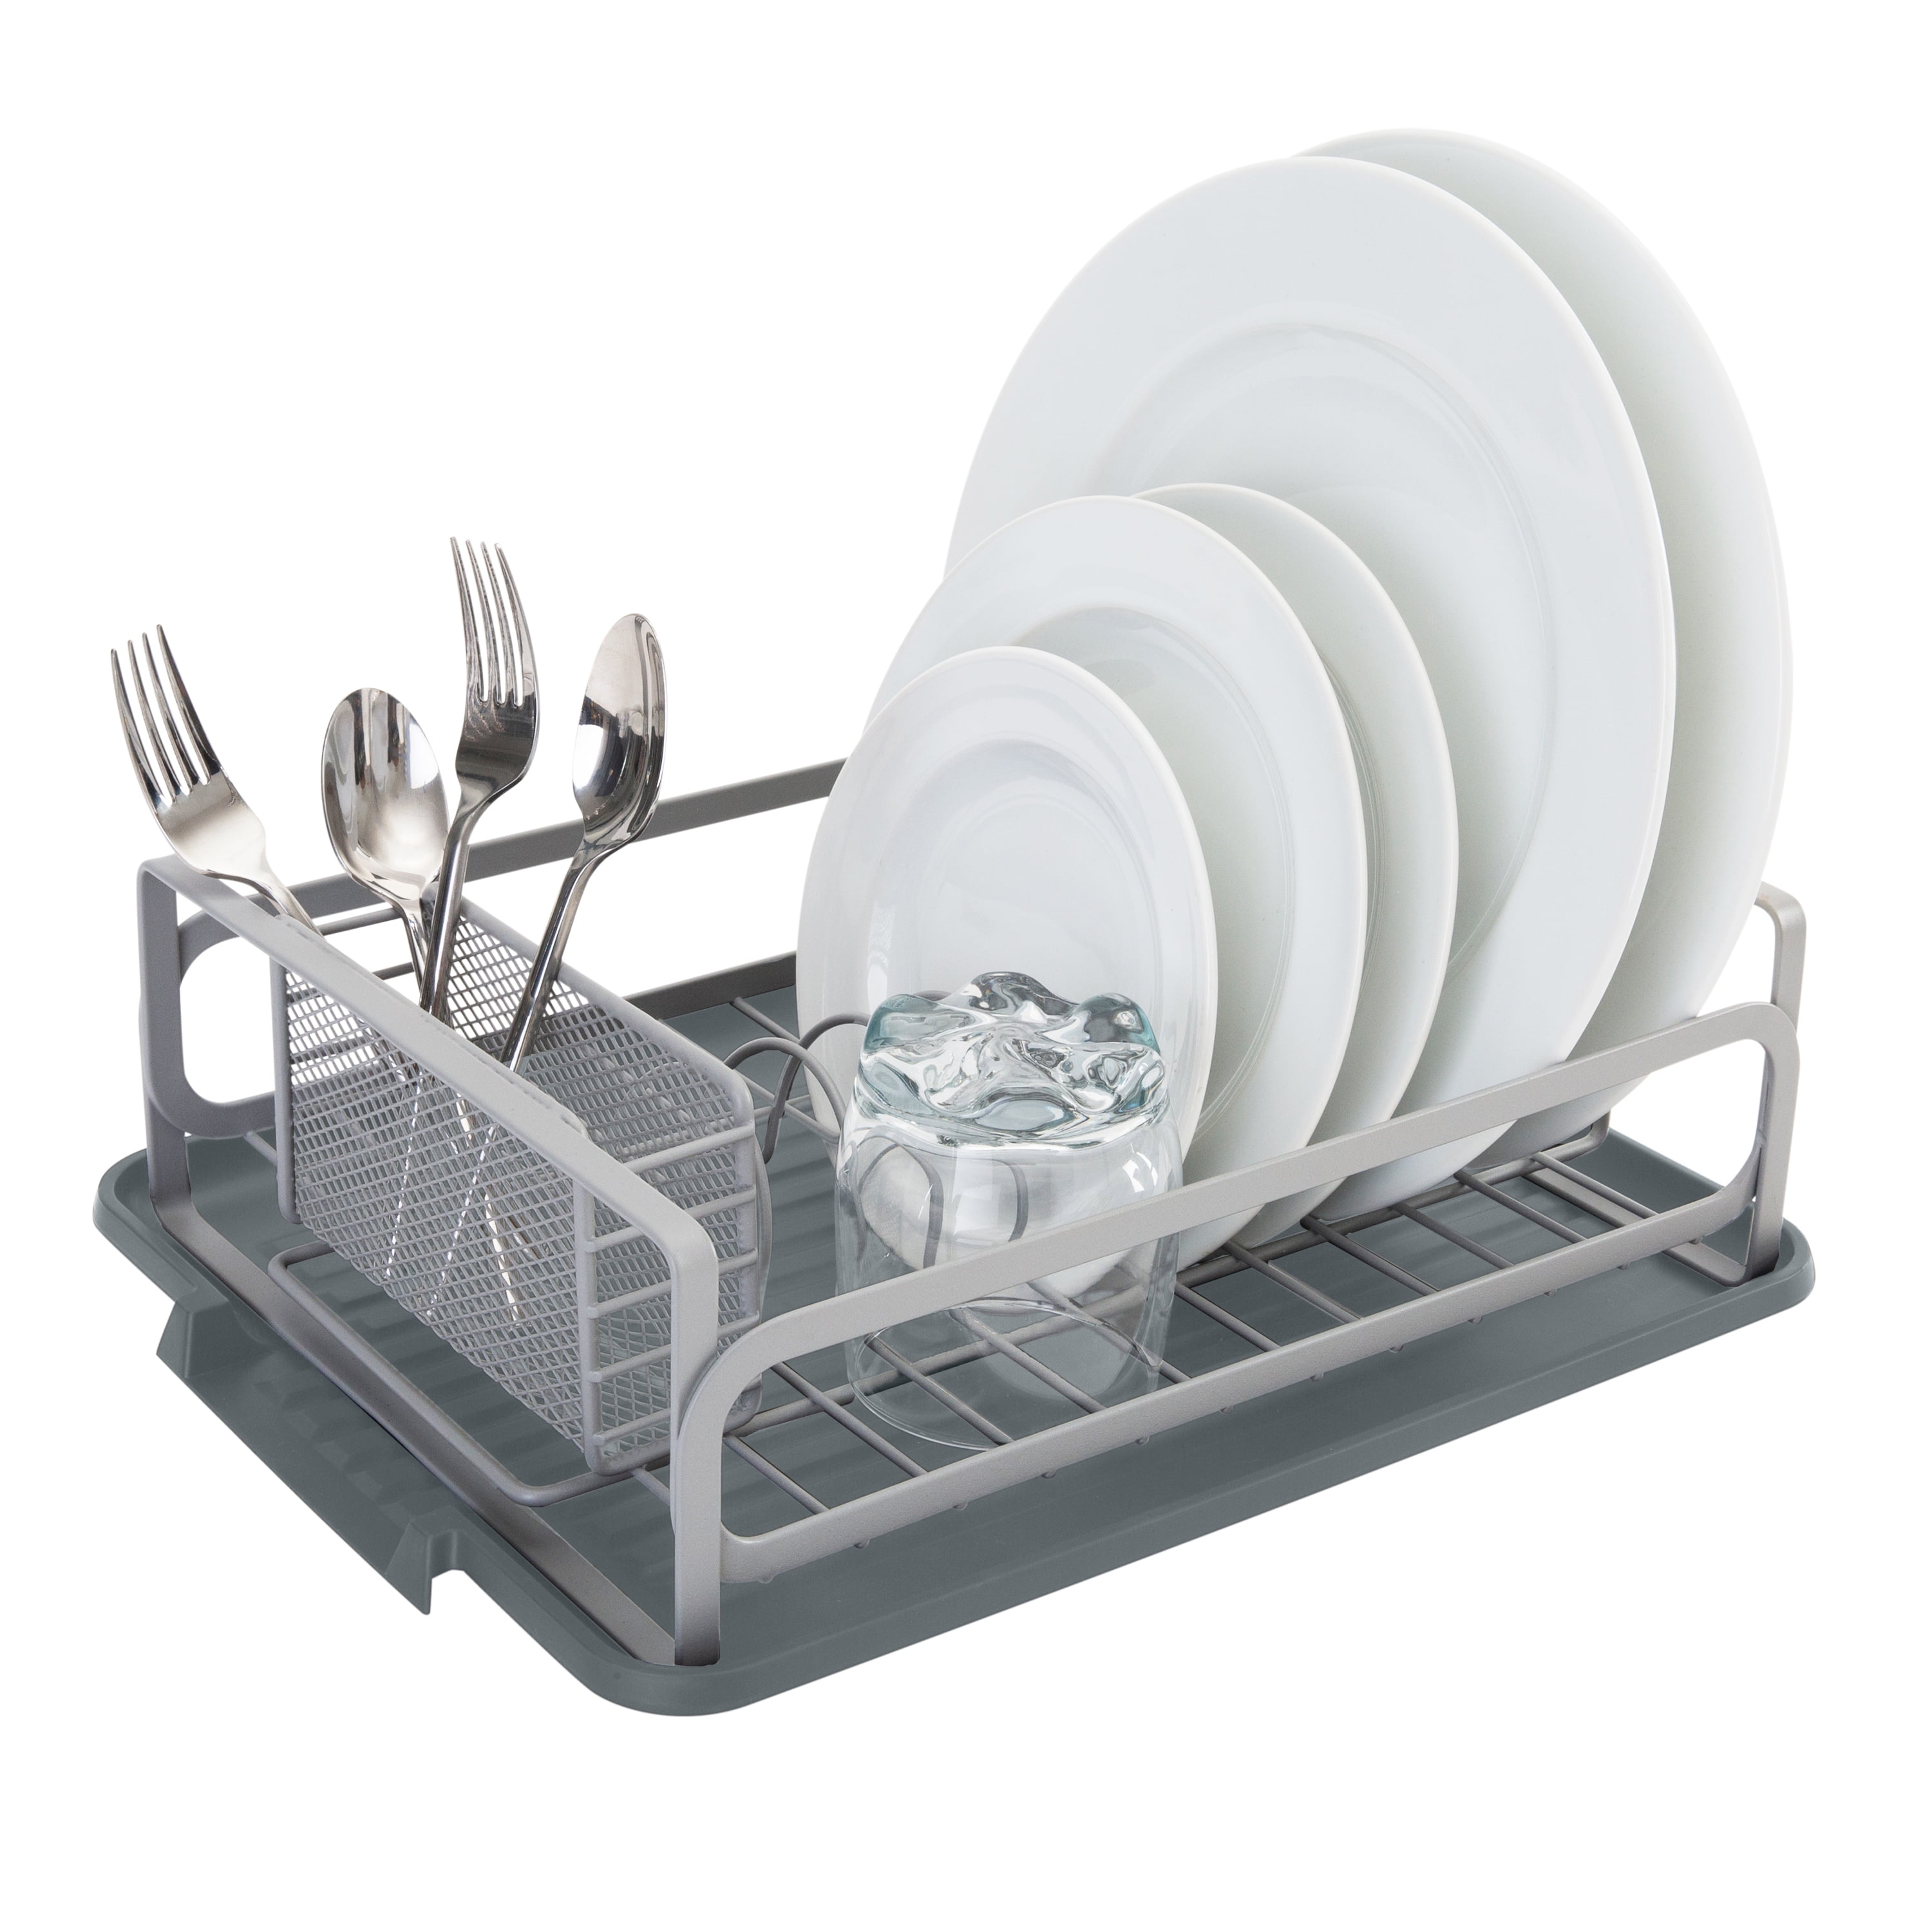 NEX Silver 2-Tier Adjustable Stainless Steel Dish Racks